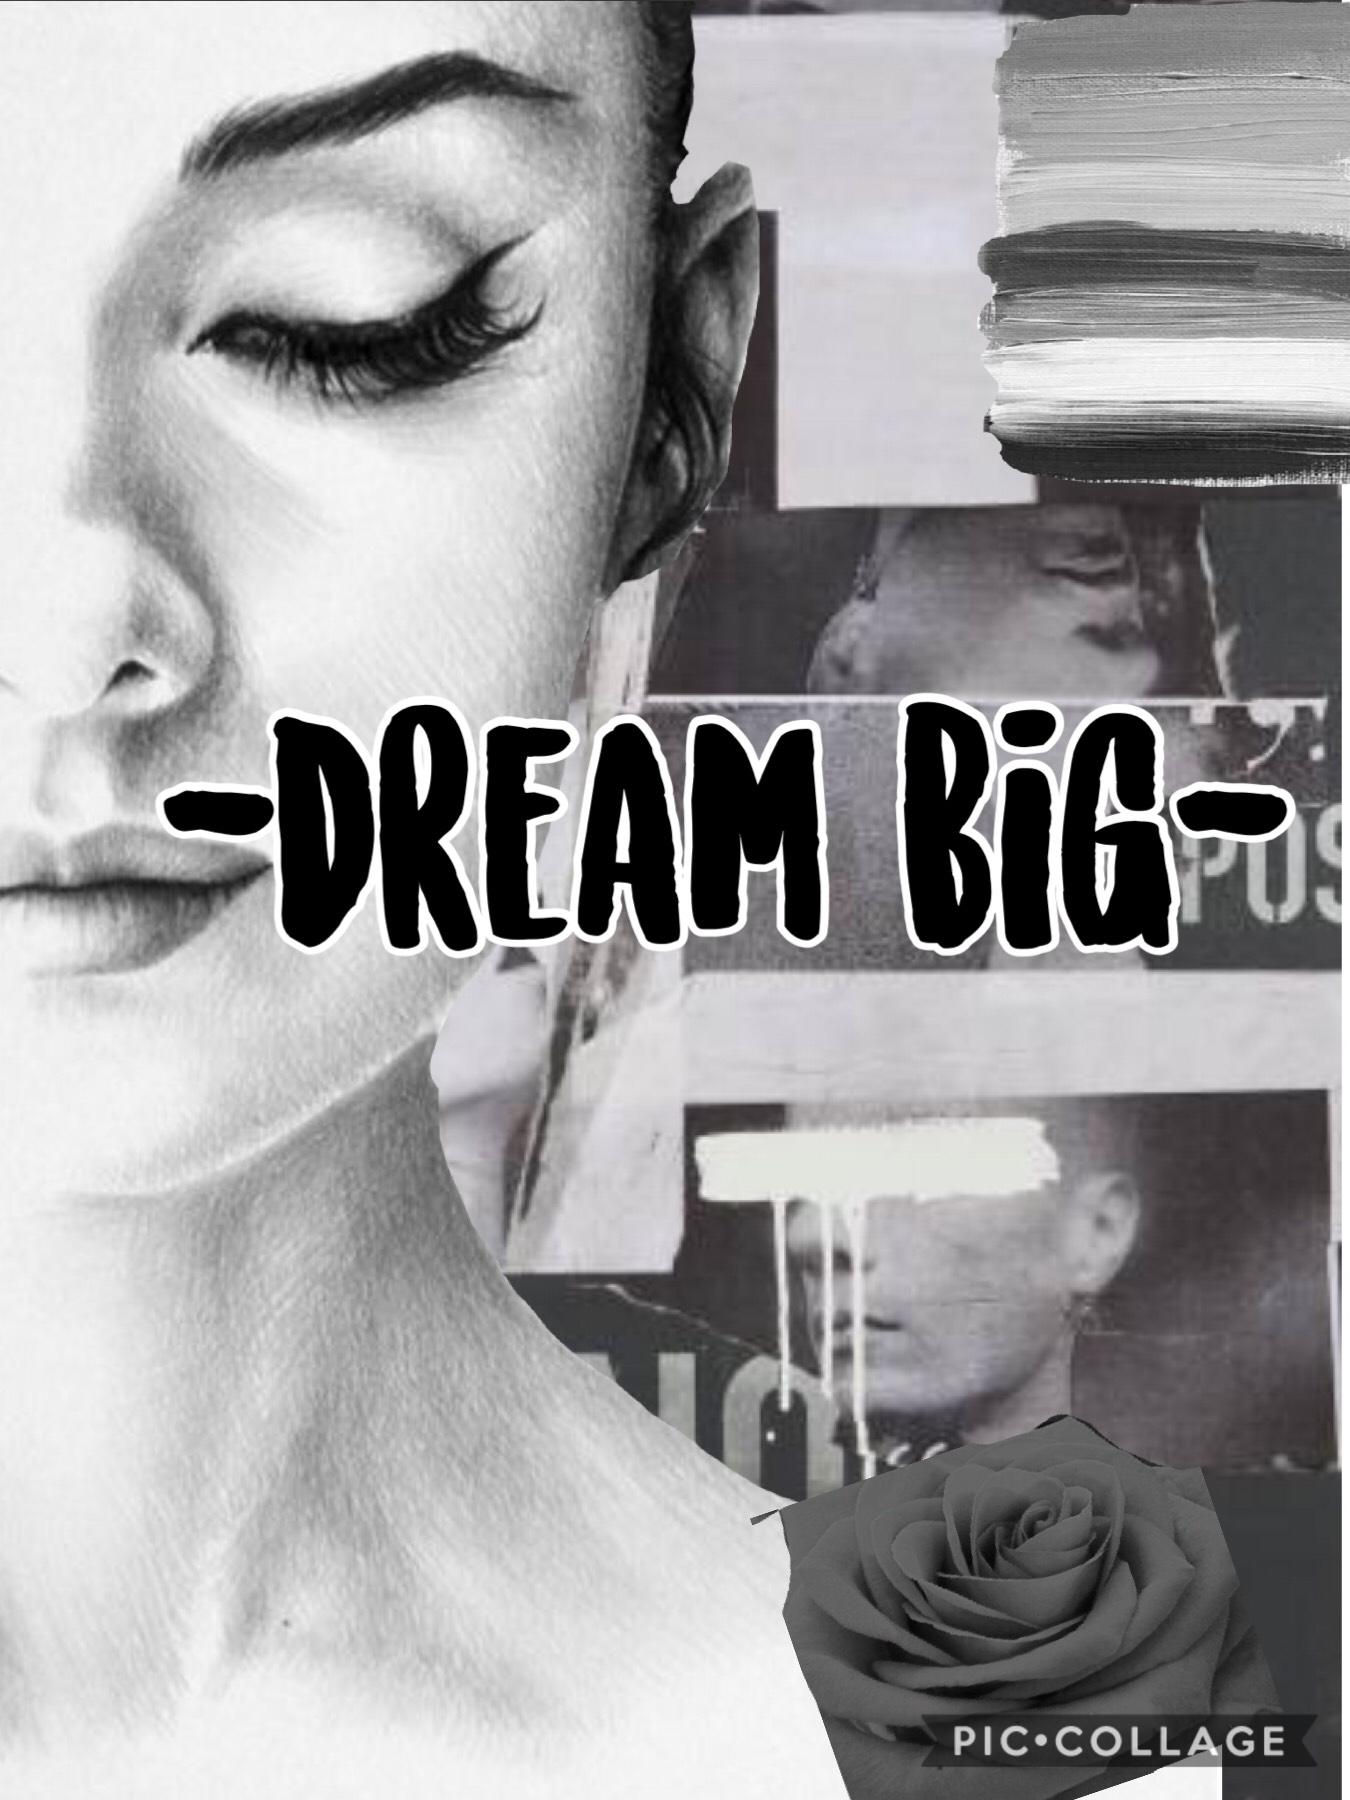 Dream big.